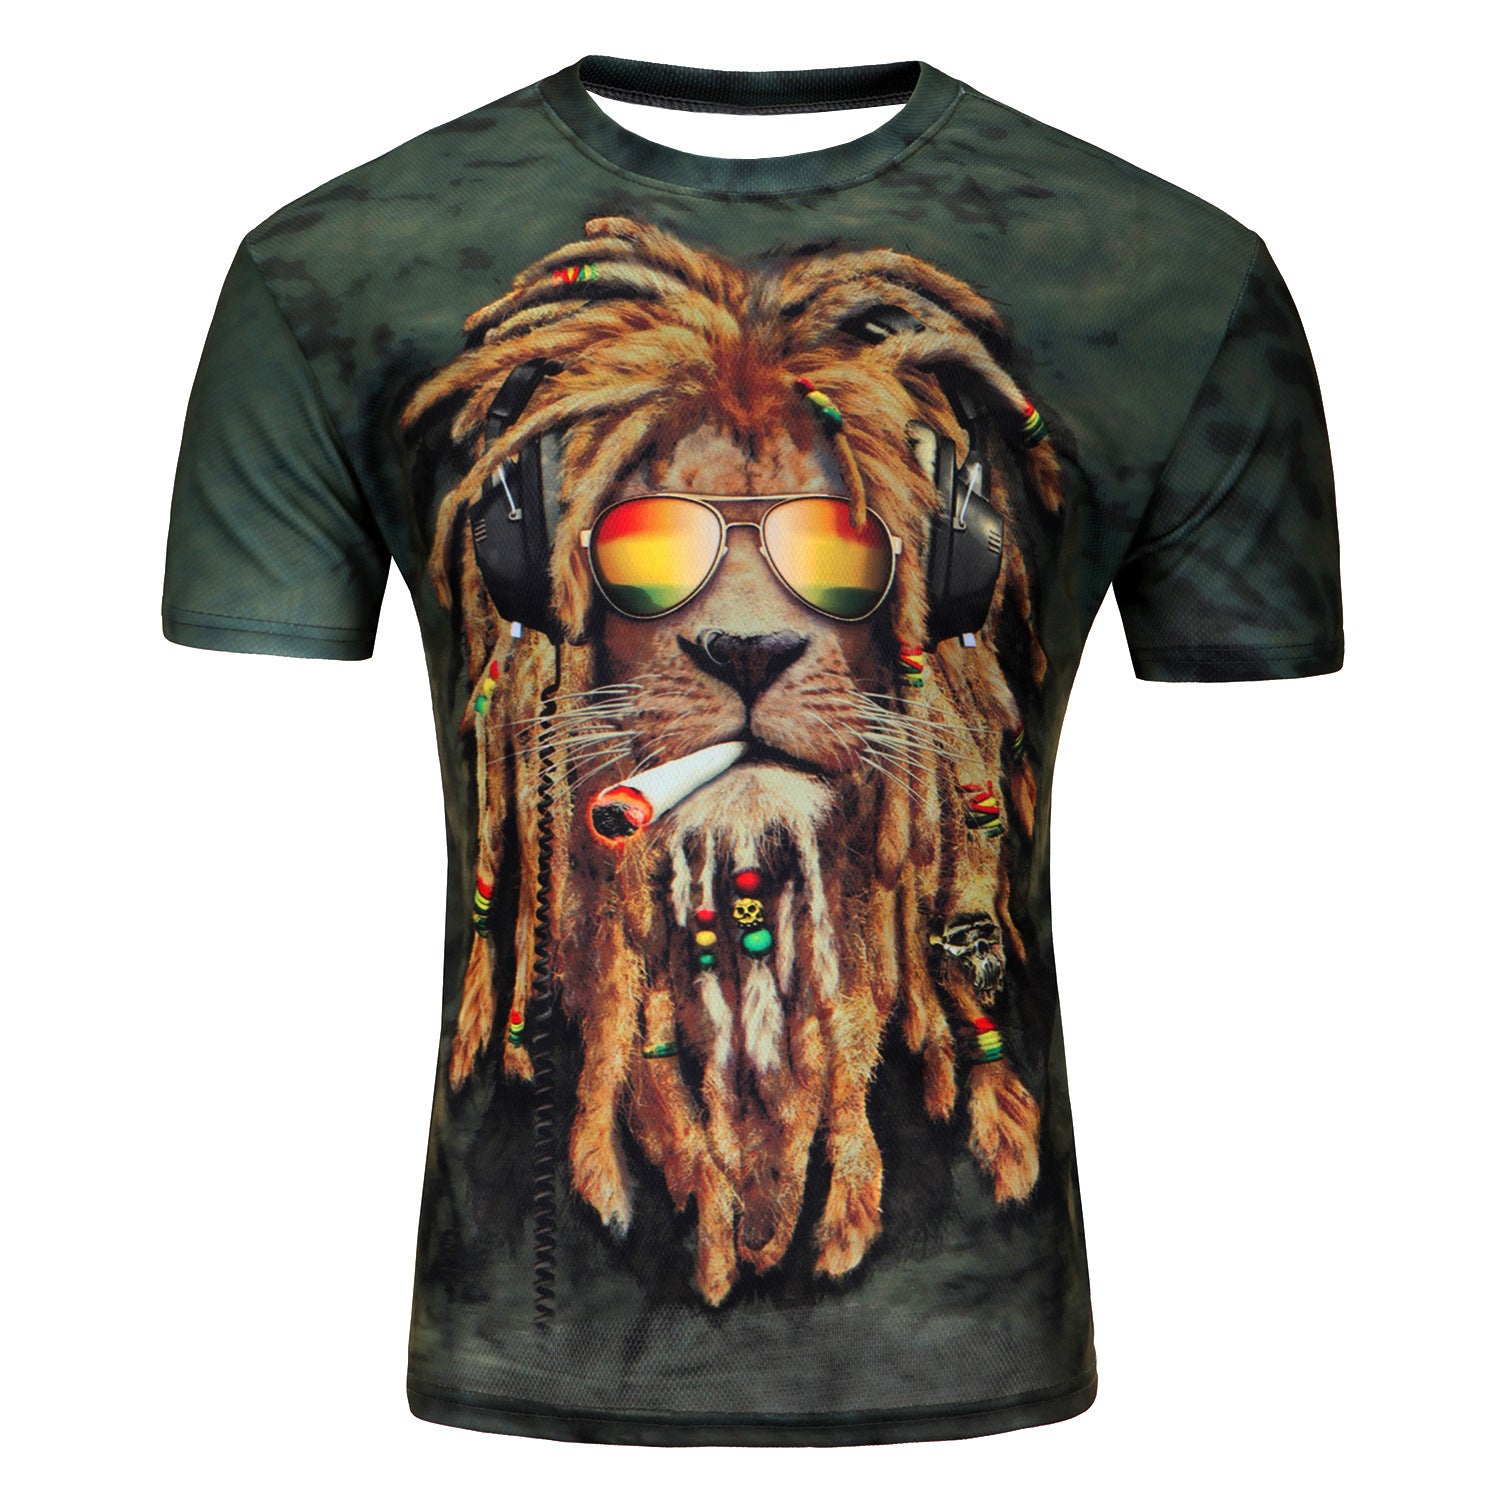 Stoner lion shirt